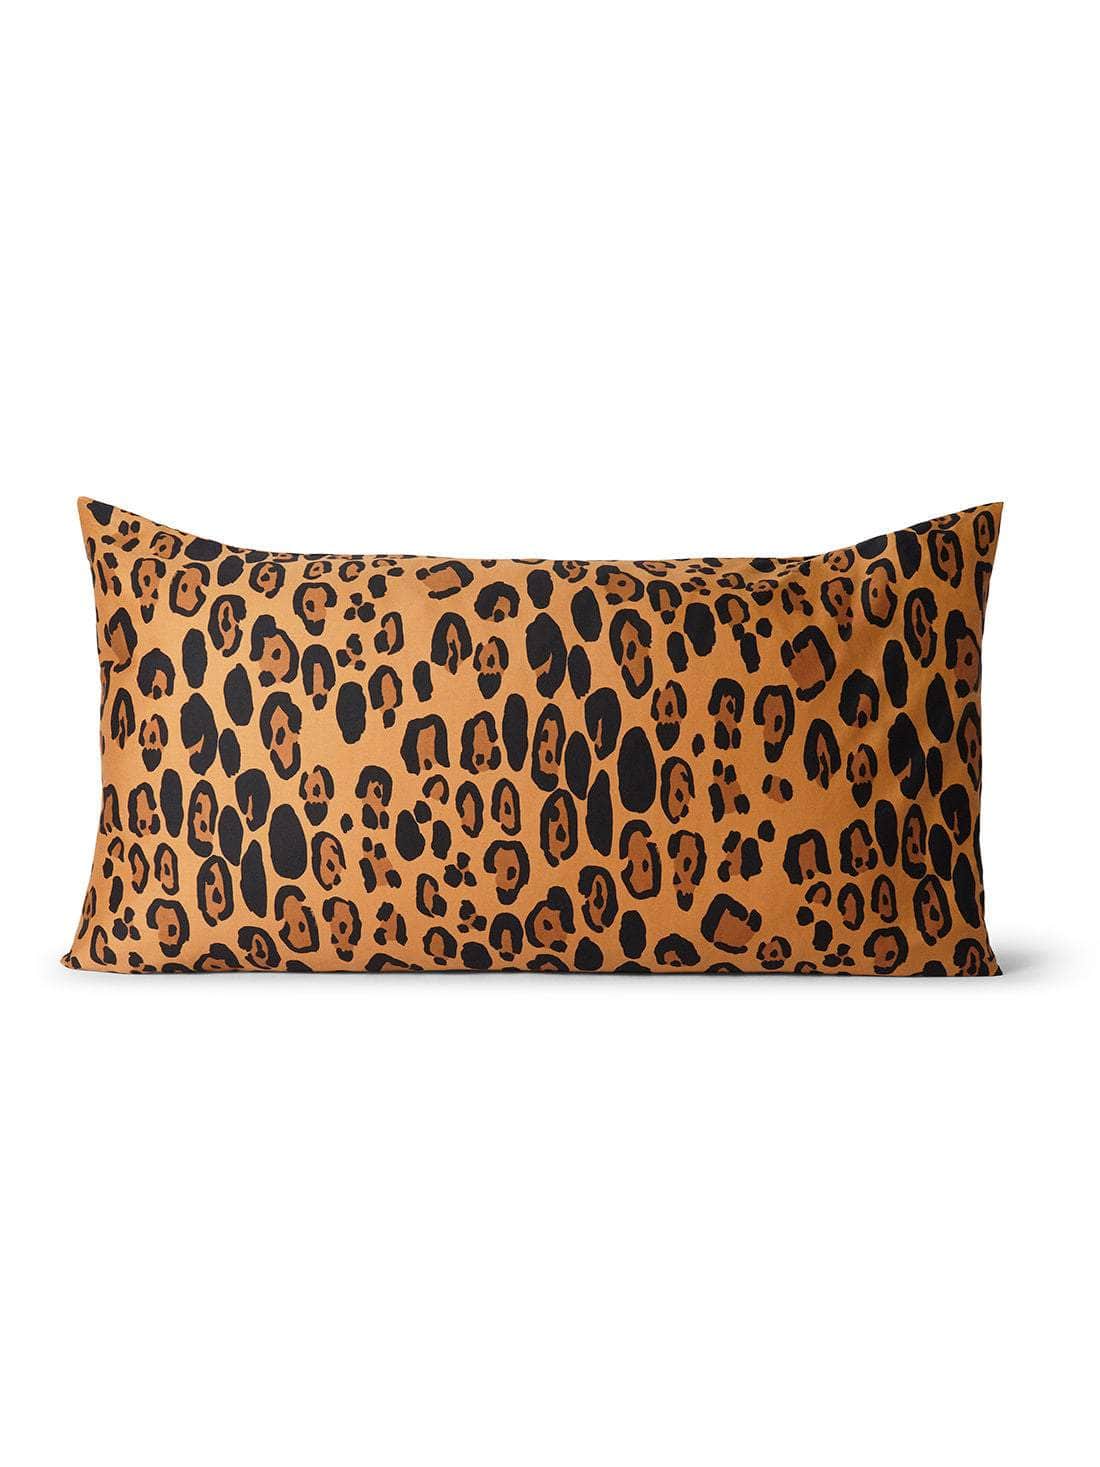 Child's Medium Leopard Print Pillowcase | Set of 2